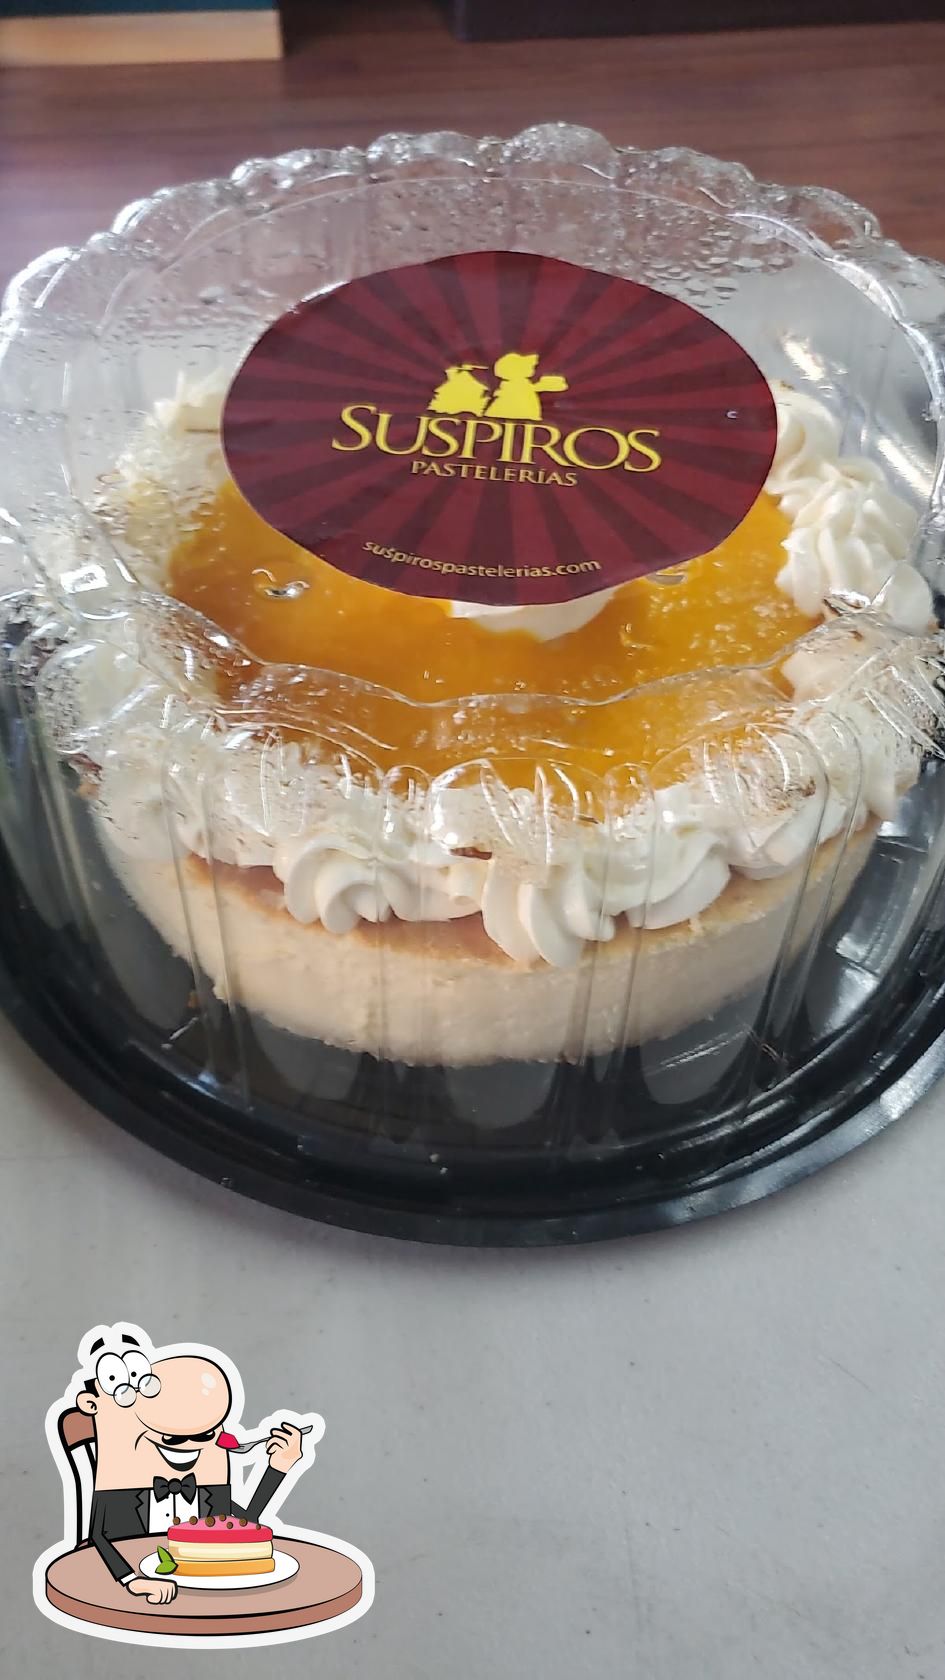 Suspiros Pastelerías desserts, Tijuana, Blvd. Agua Caliente 9150 -  Restaurant reviews